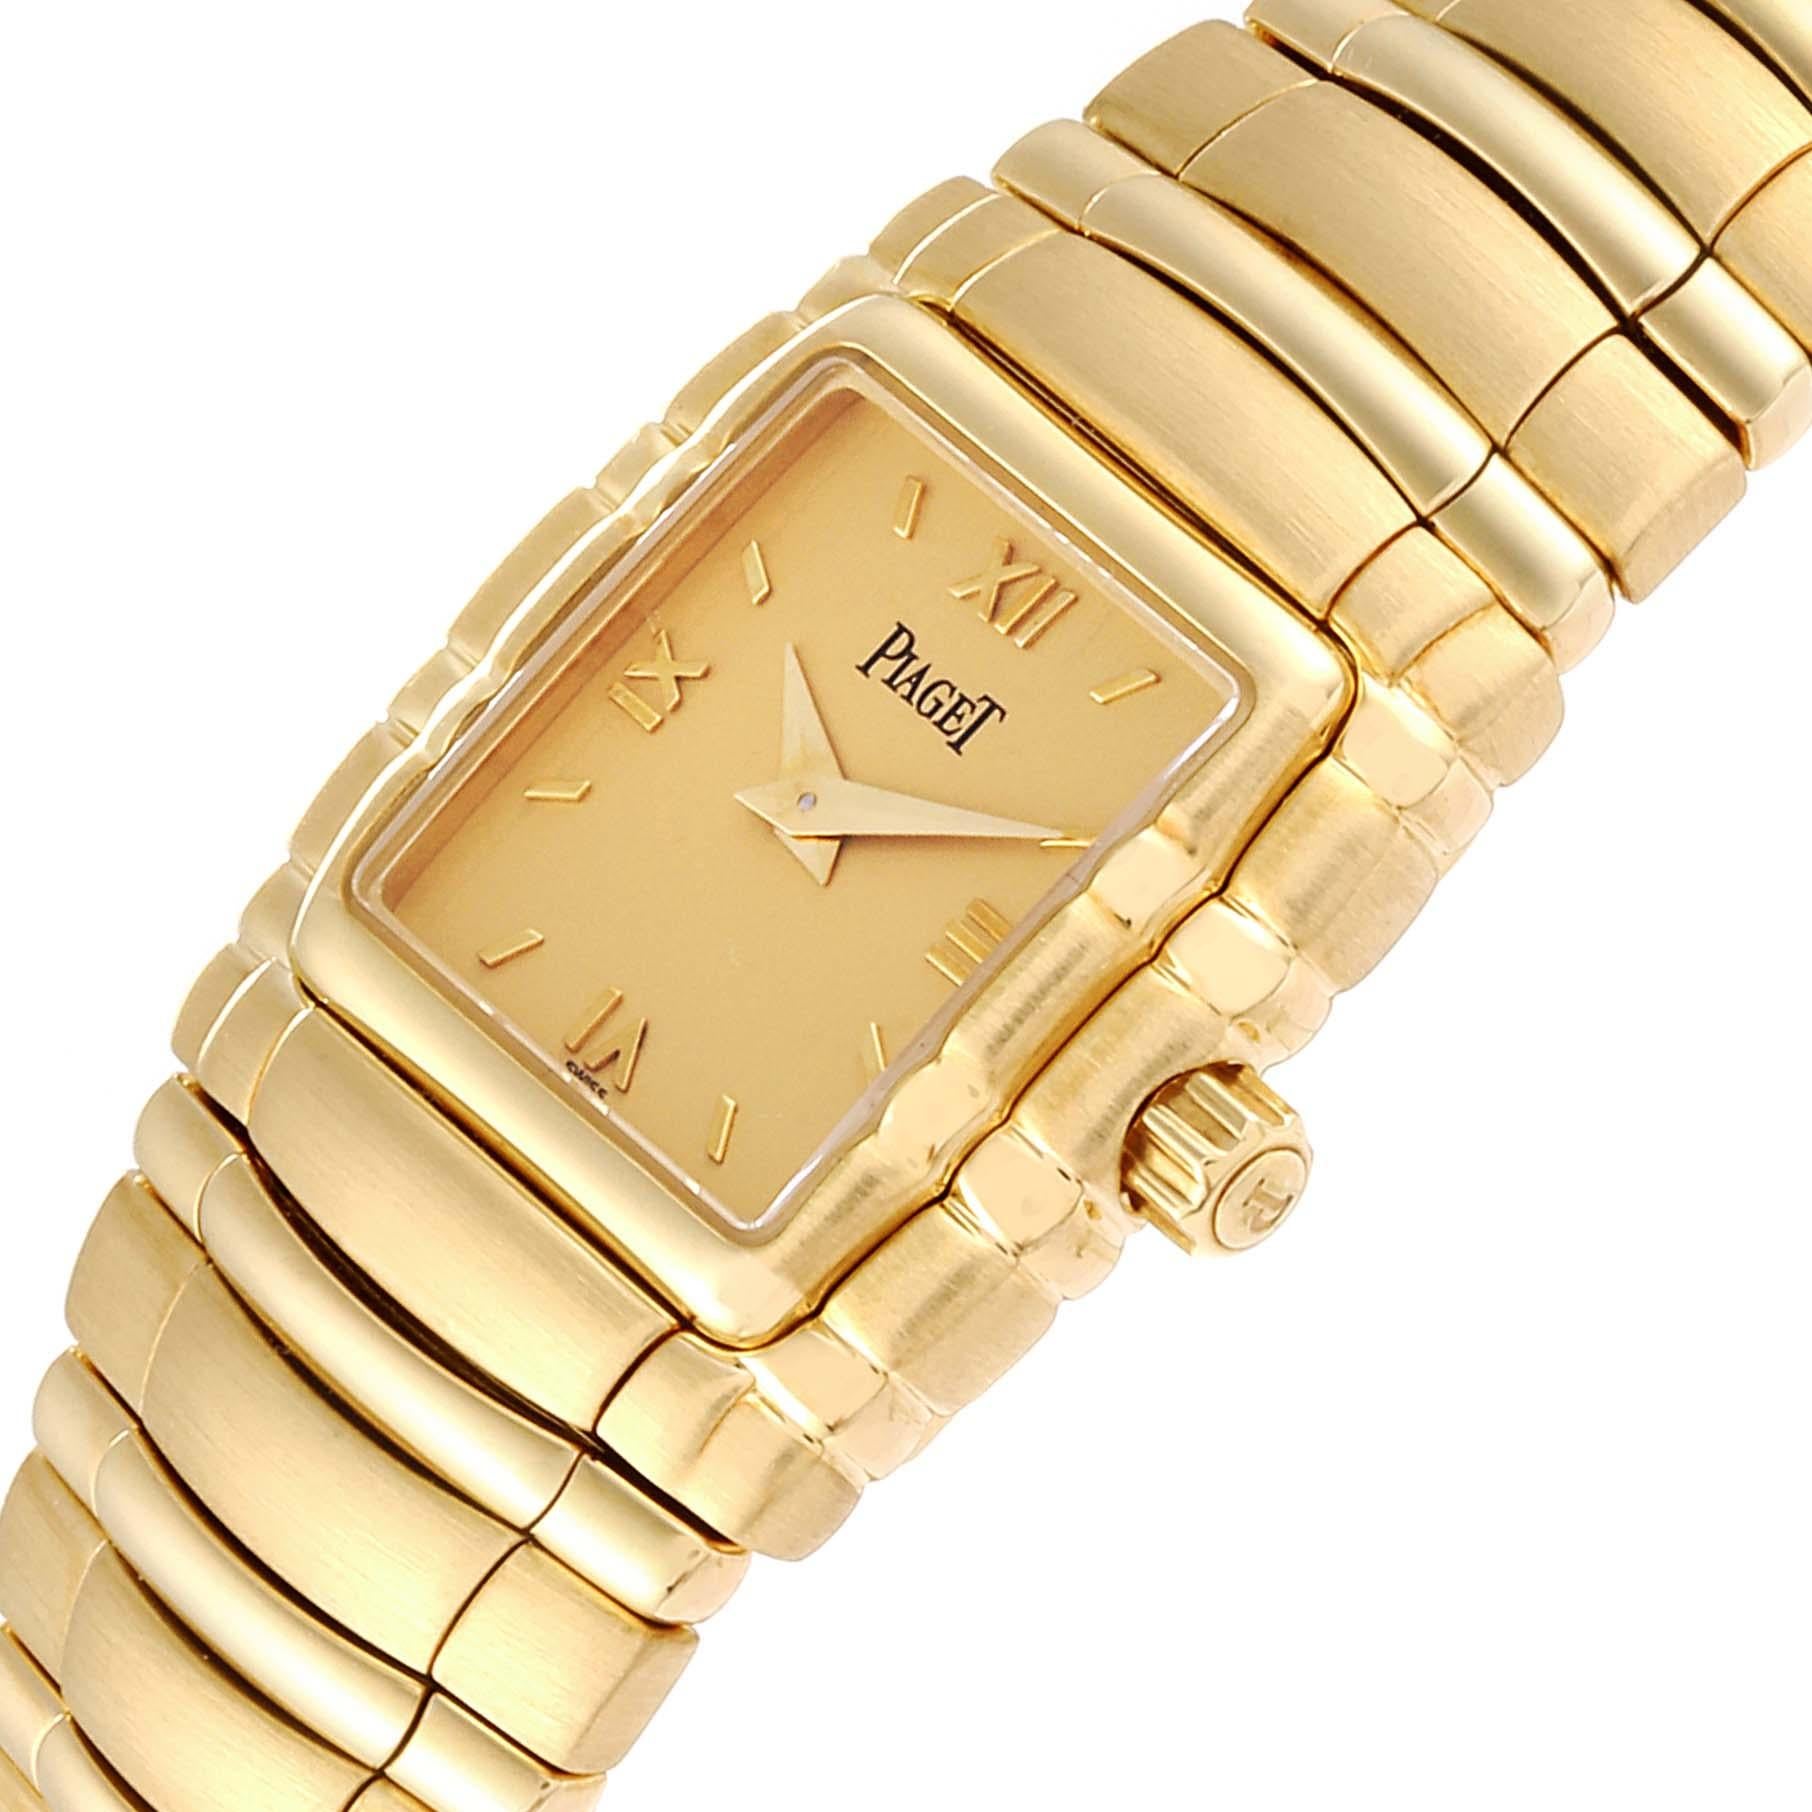 Piaget Tanagra 18 Karat Yellow Gold Mechanical Ladies Watch M411 For Sale 1